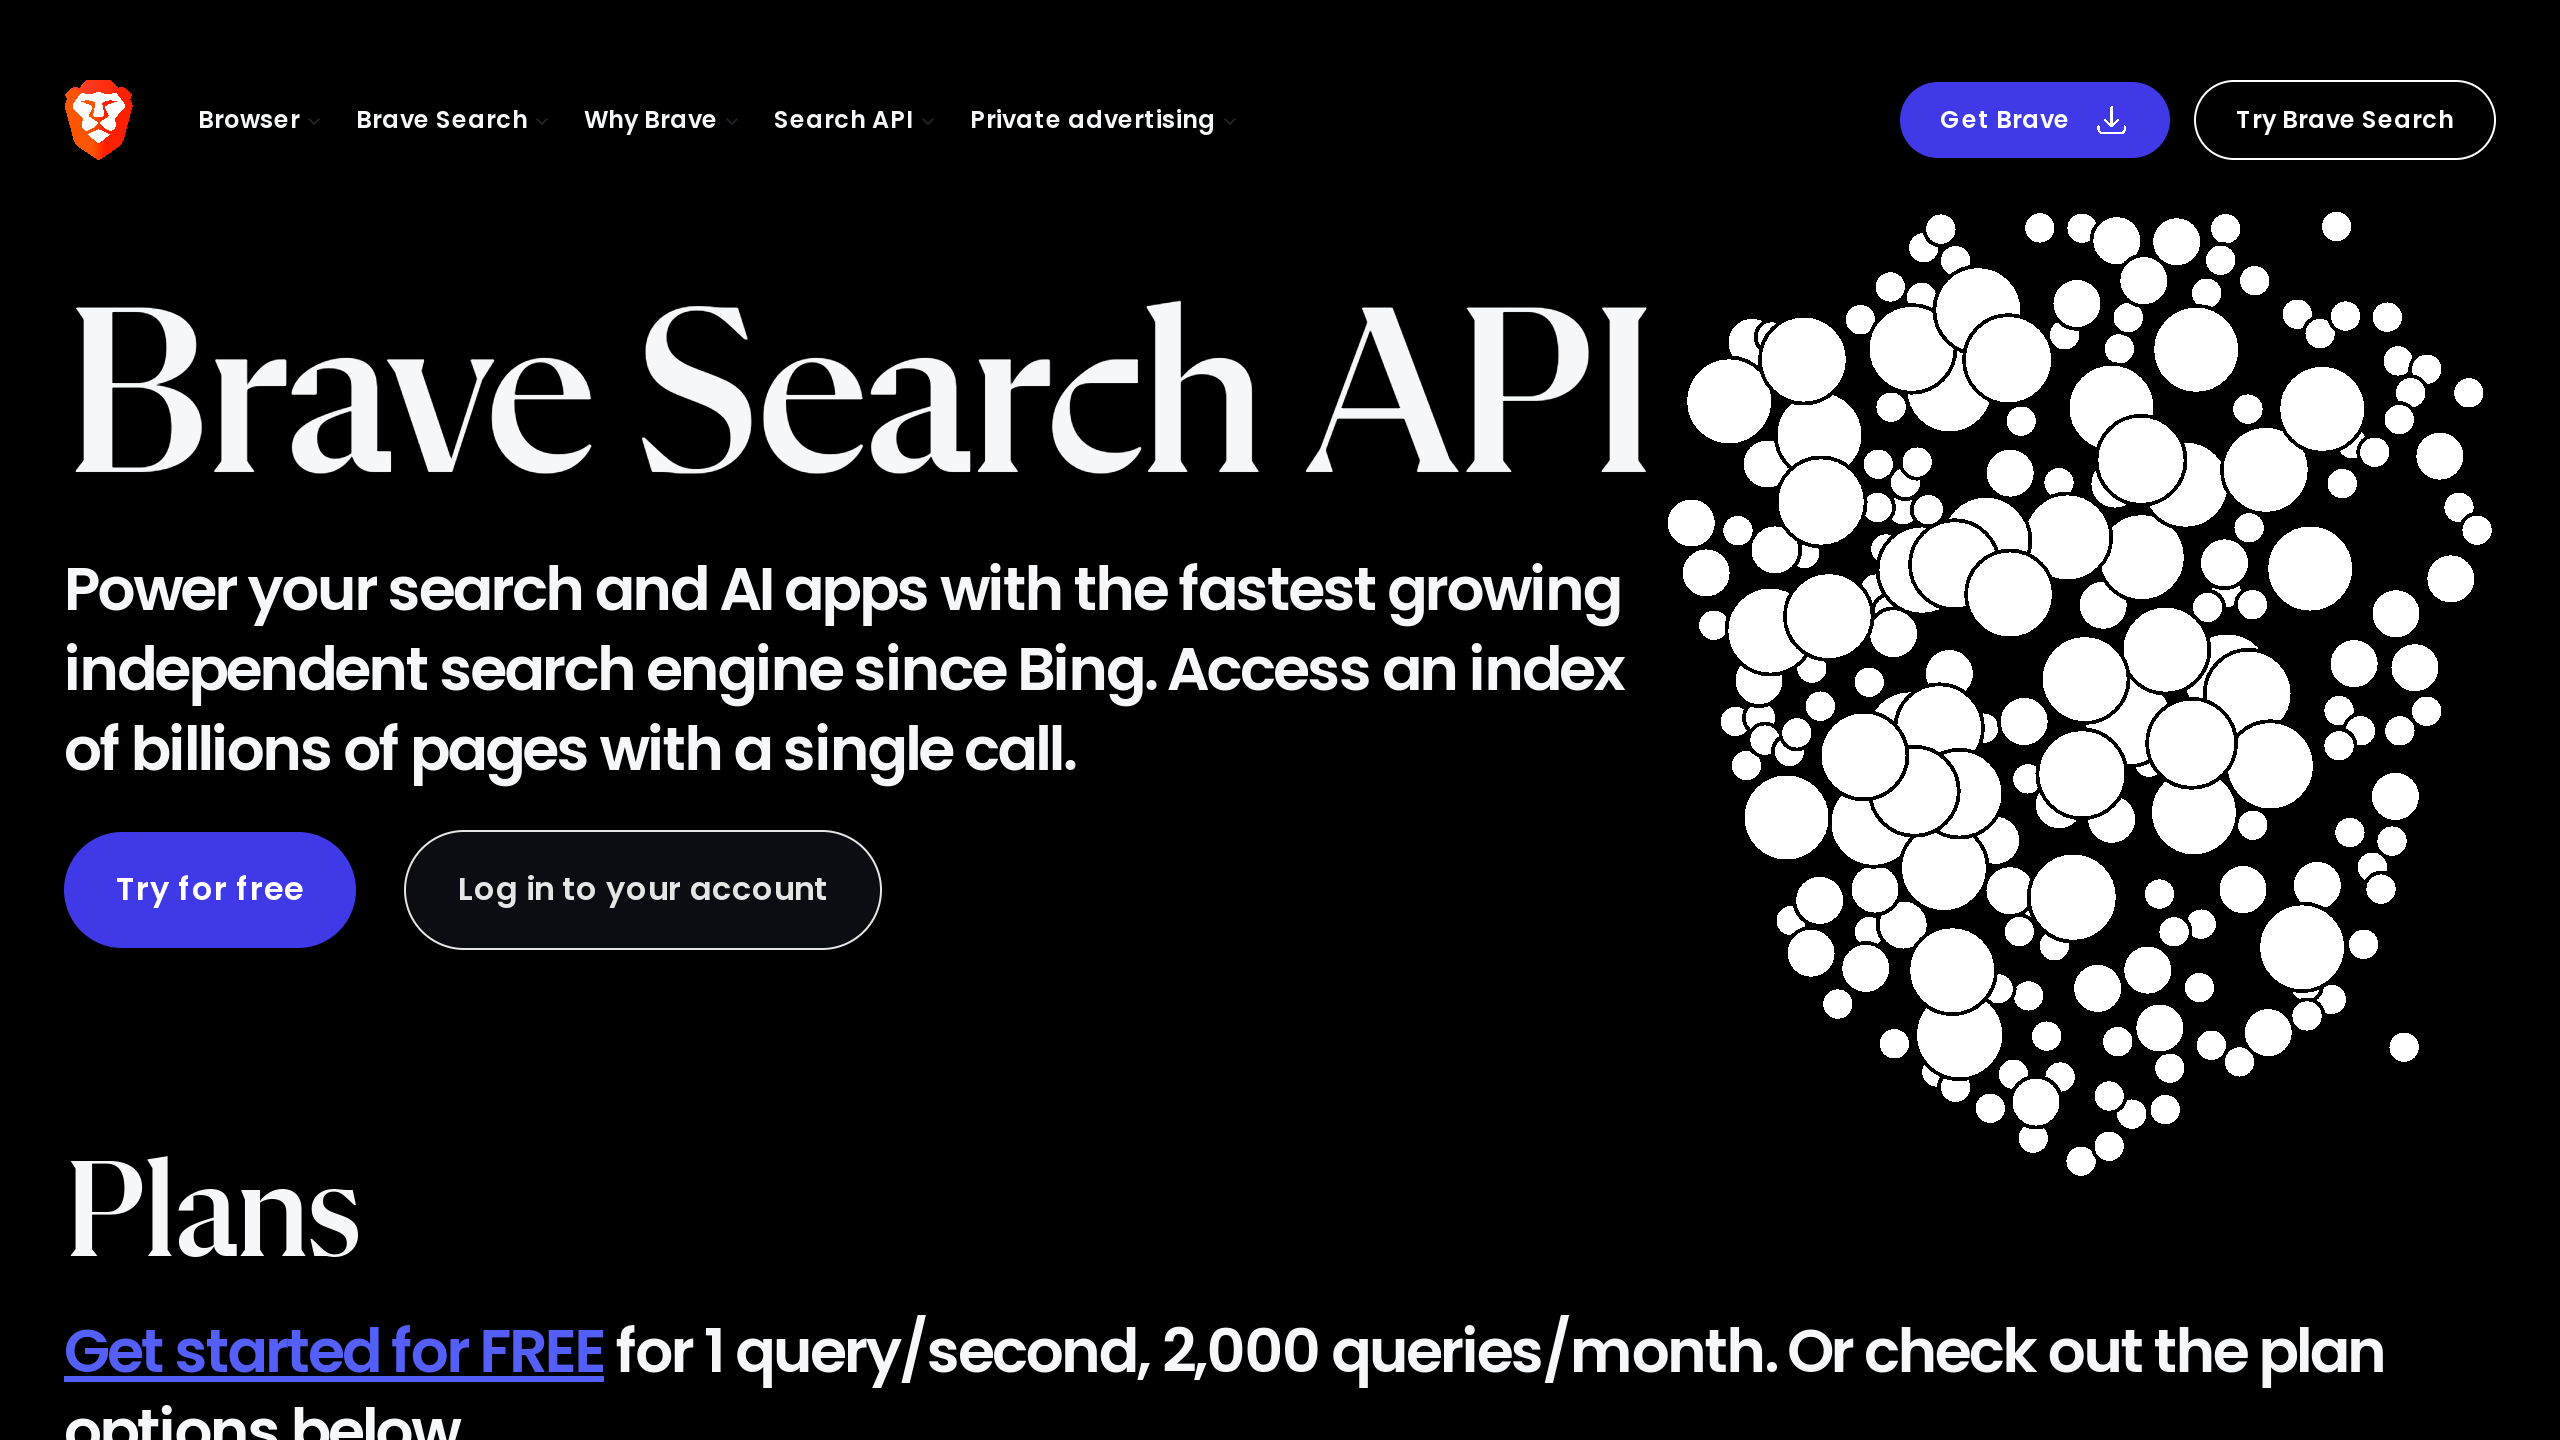 Brave Search API's website screenshot